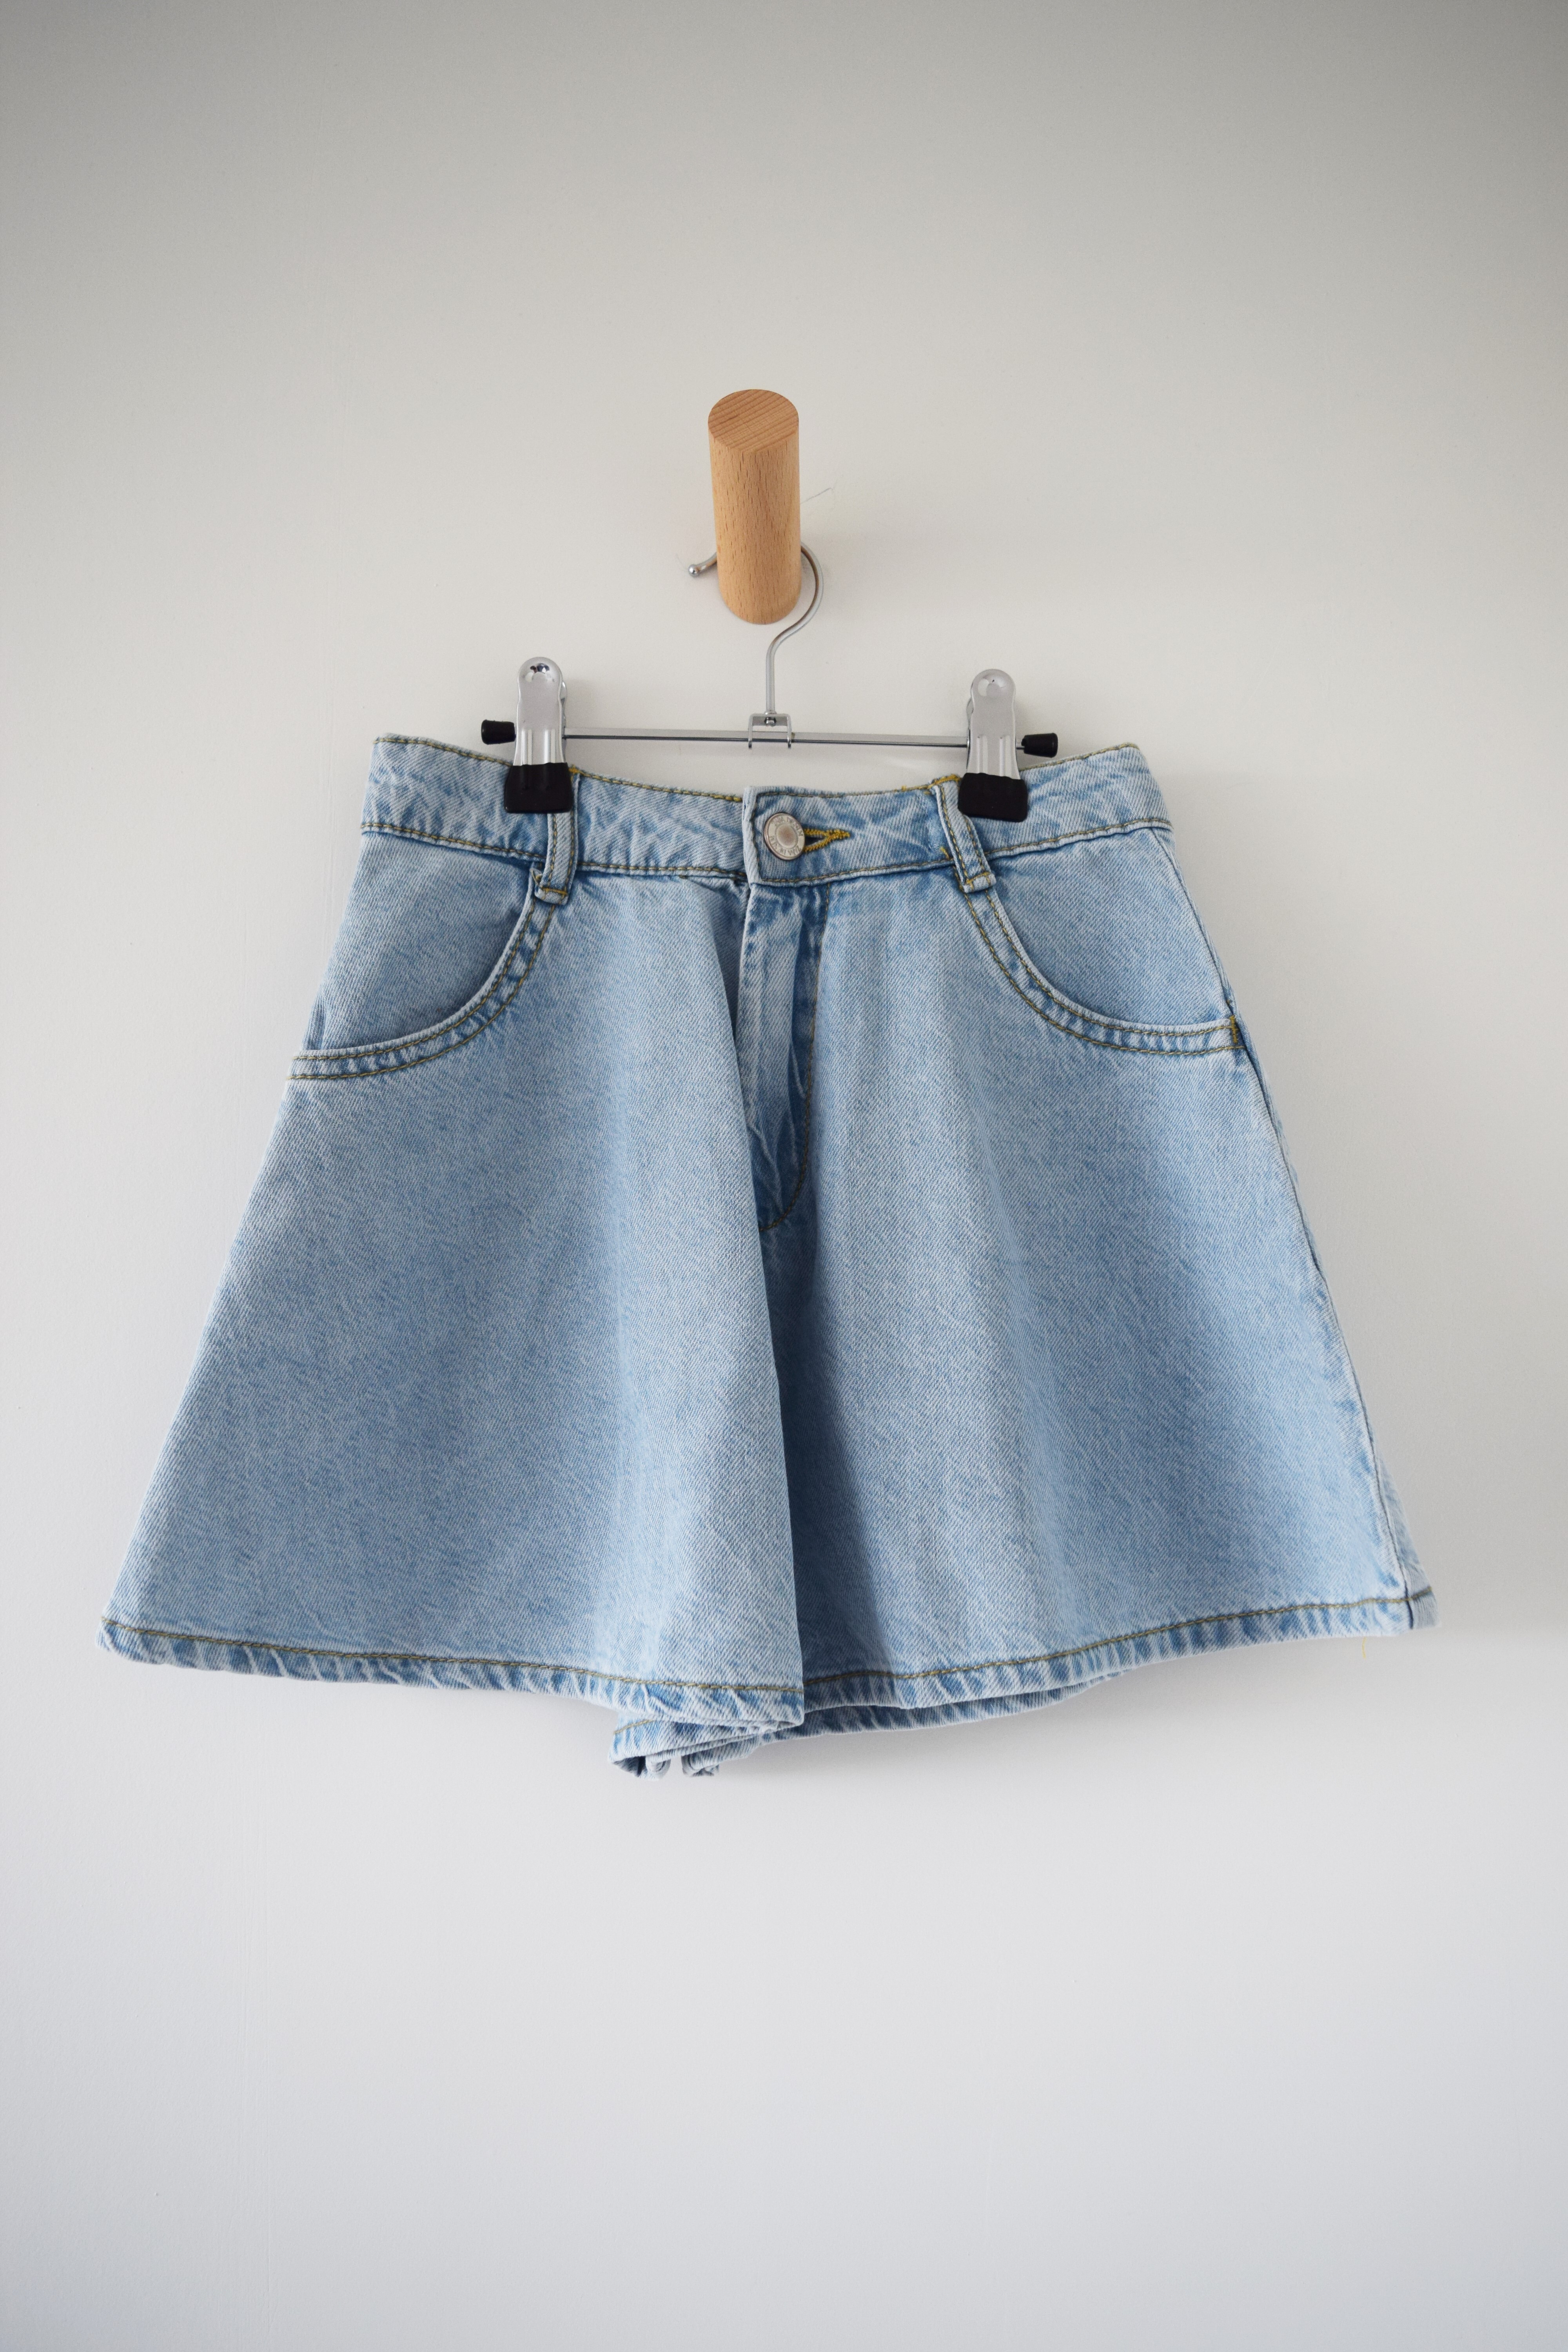 Jeans short, Zara, 122 